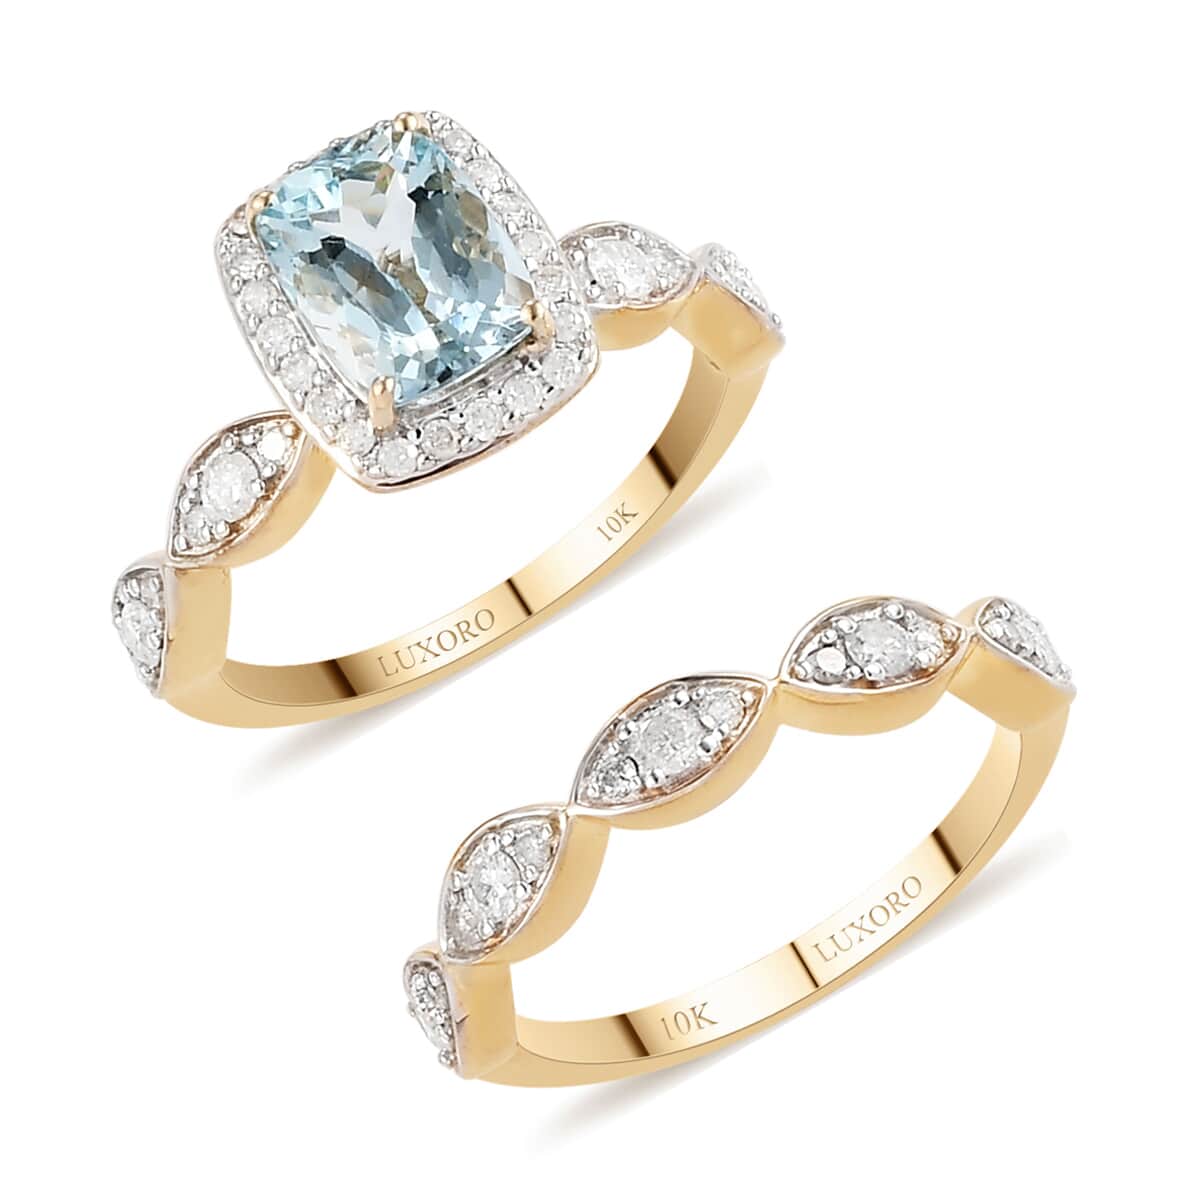 LUXORO 10K Yellow Gold Espirito Santo Aquamarine and G-H I3 Diamond Set of 2 Ring (Size 7.0) 4.45 Grams 1.85 ctw image number 0